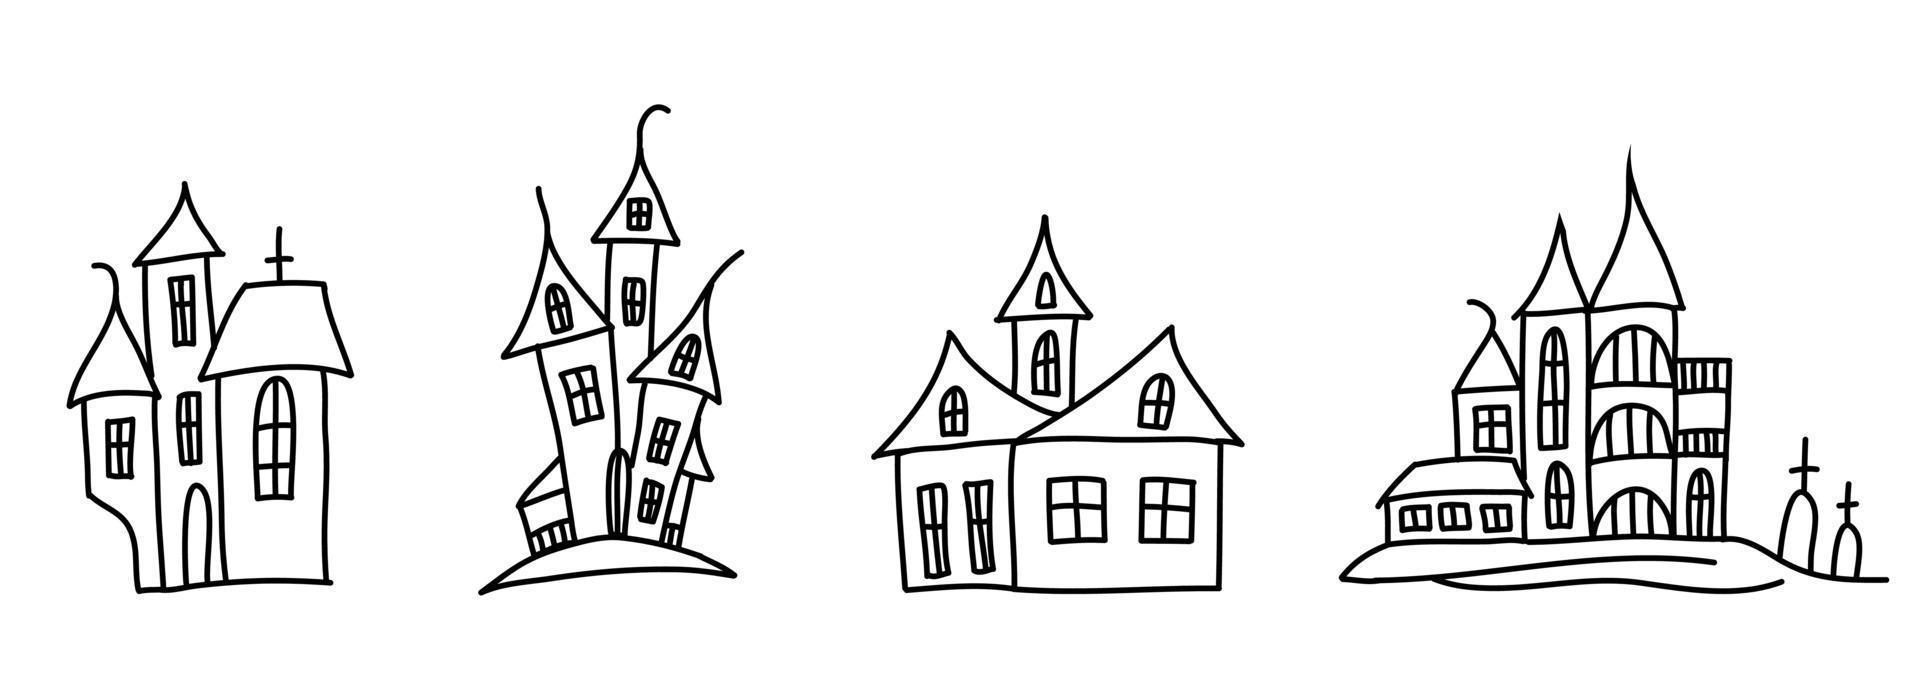 siluetas de casas aterradoras en estilo doodle. vector